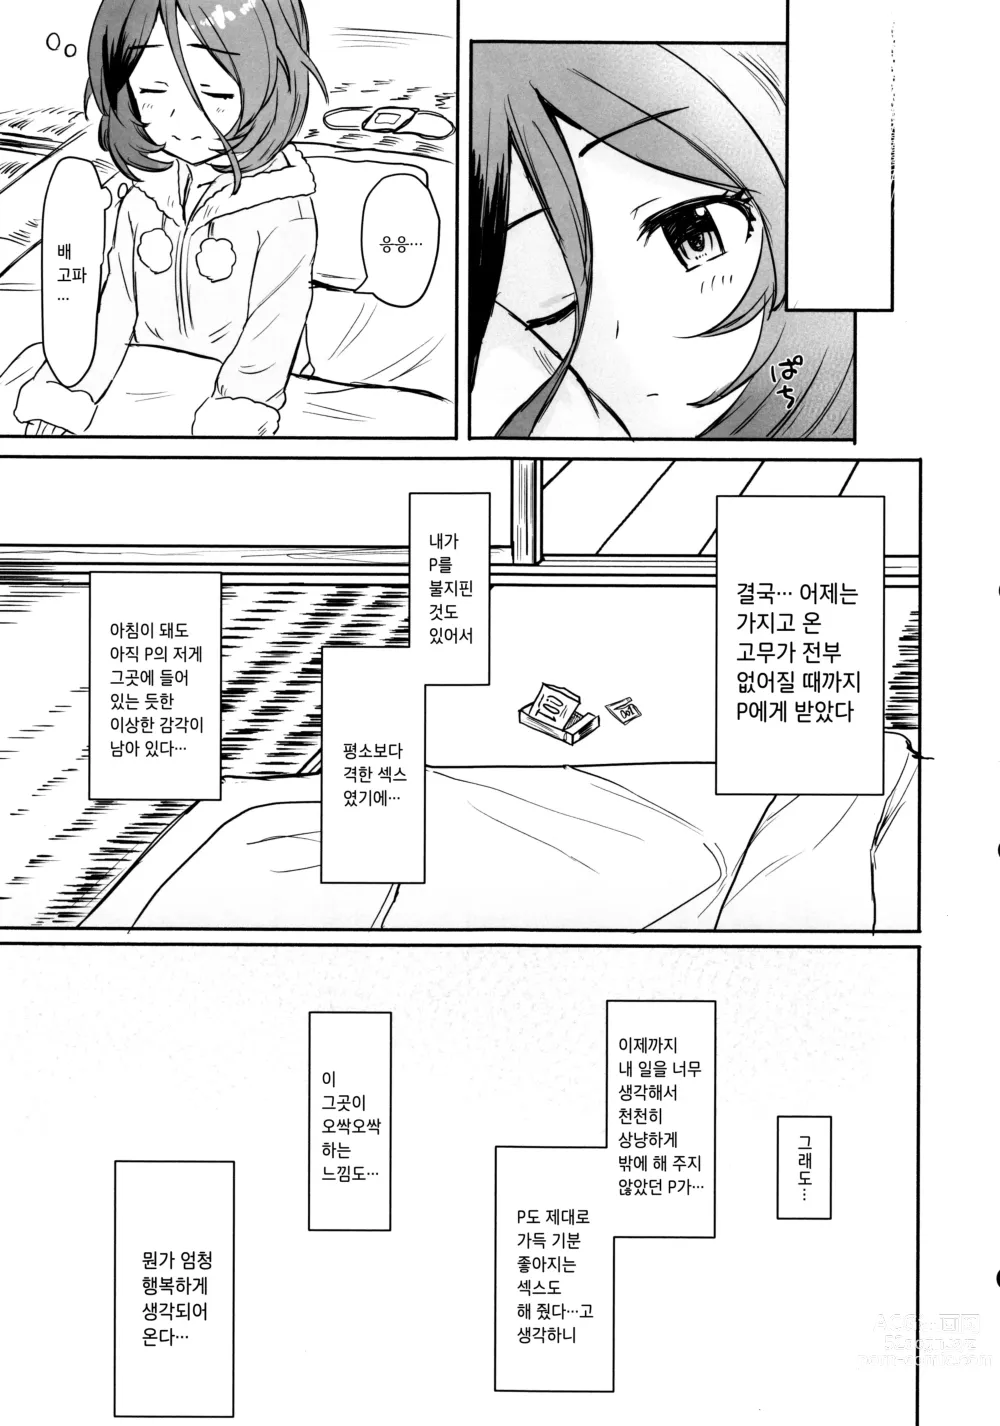 Page 19 of doujinshi Untamed Love